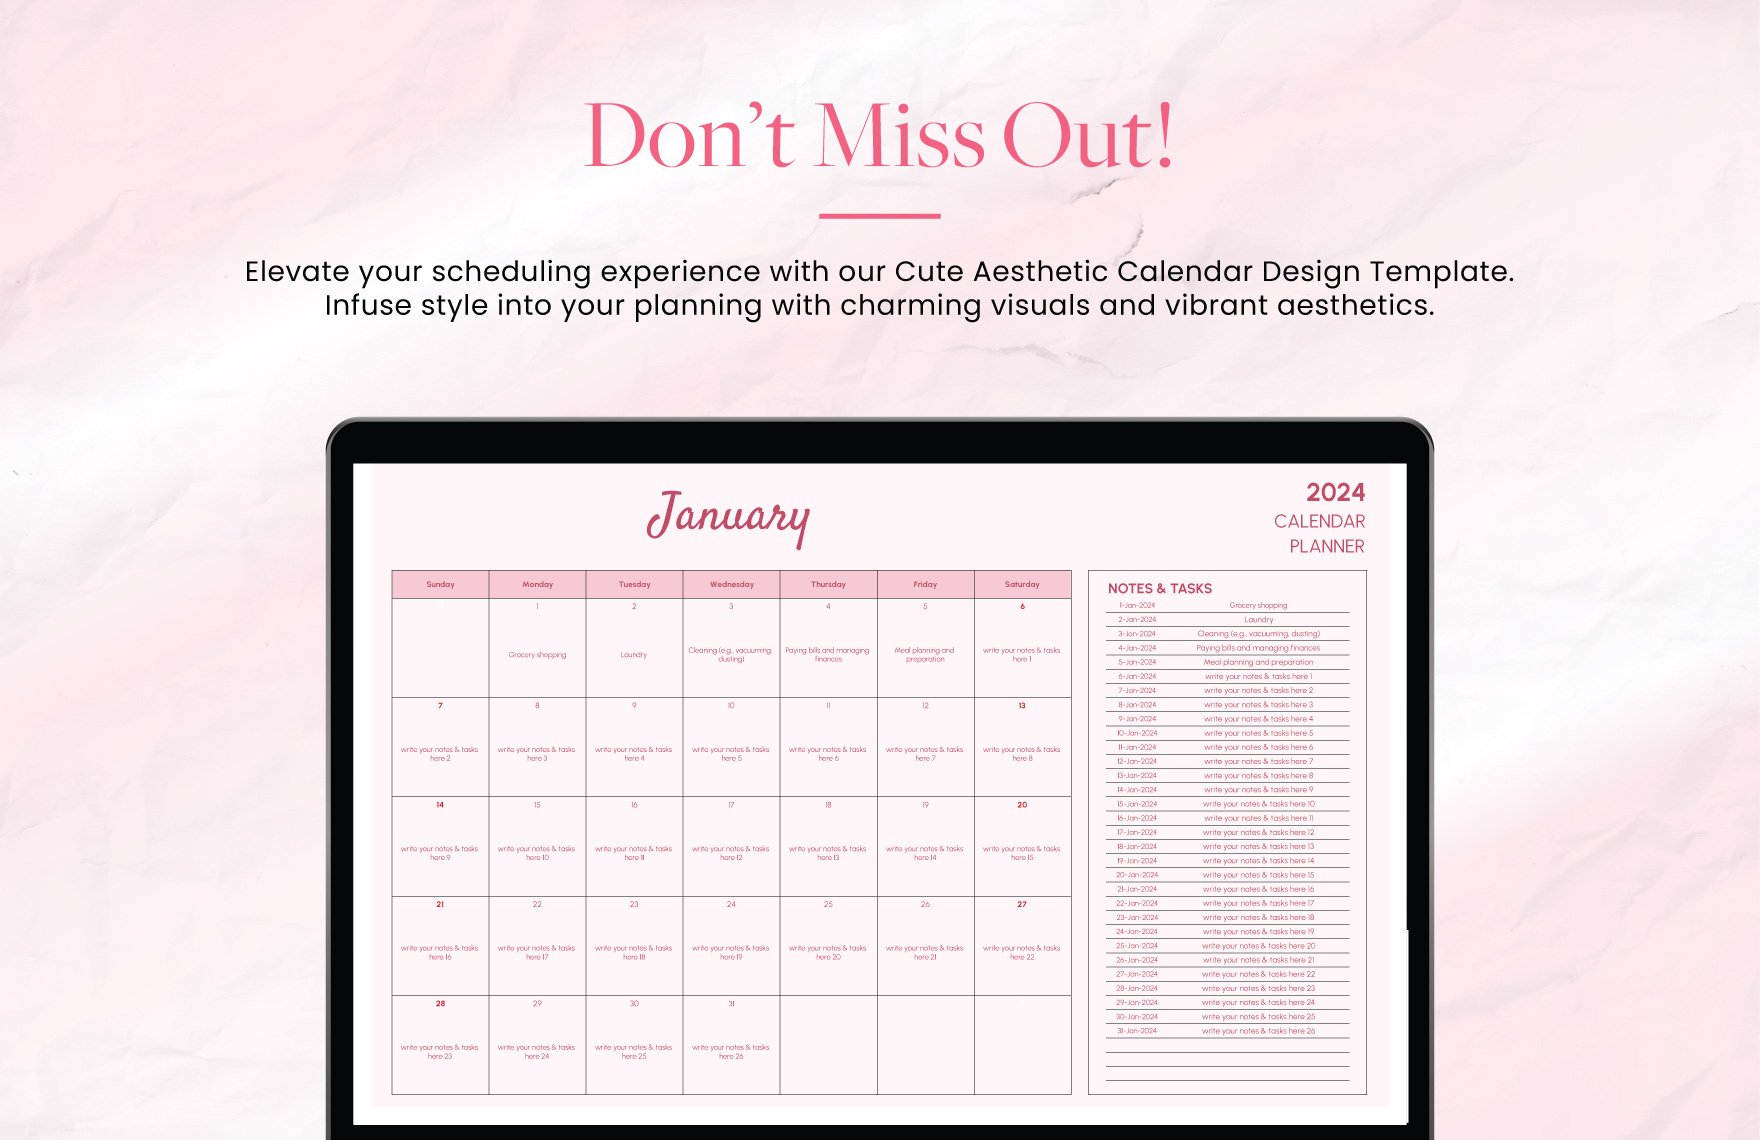 Free Cute Aesthetic Calendar Design Template - Download in Excel ...